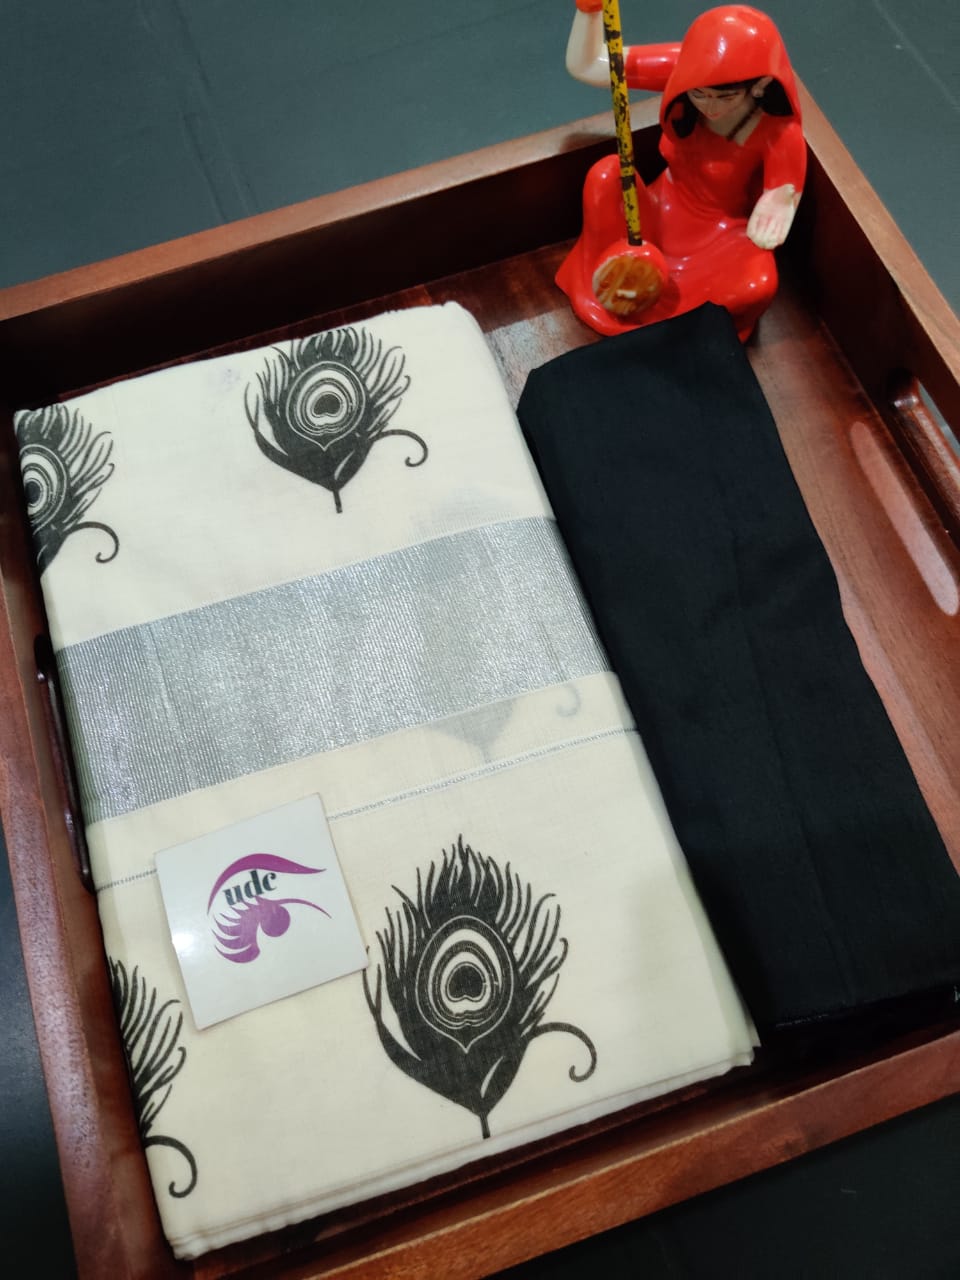 Kerala cotton hand printed work saree